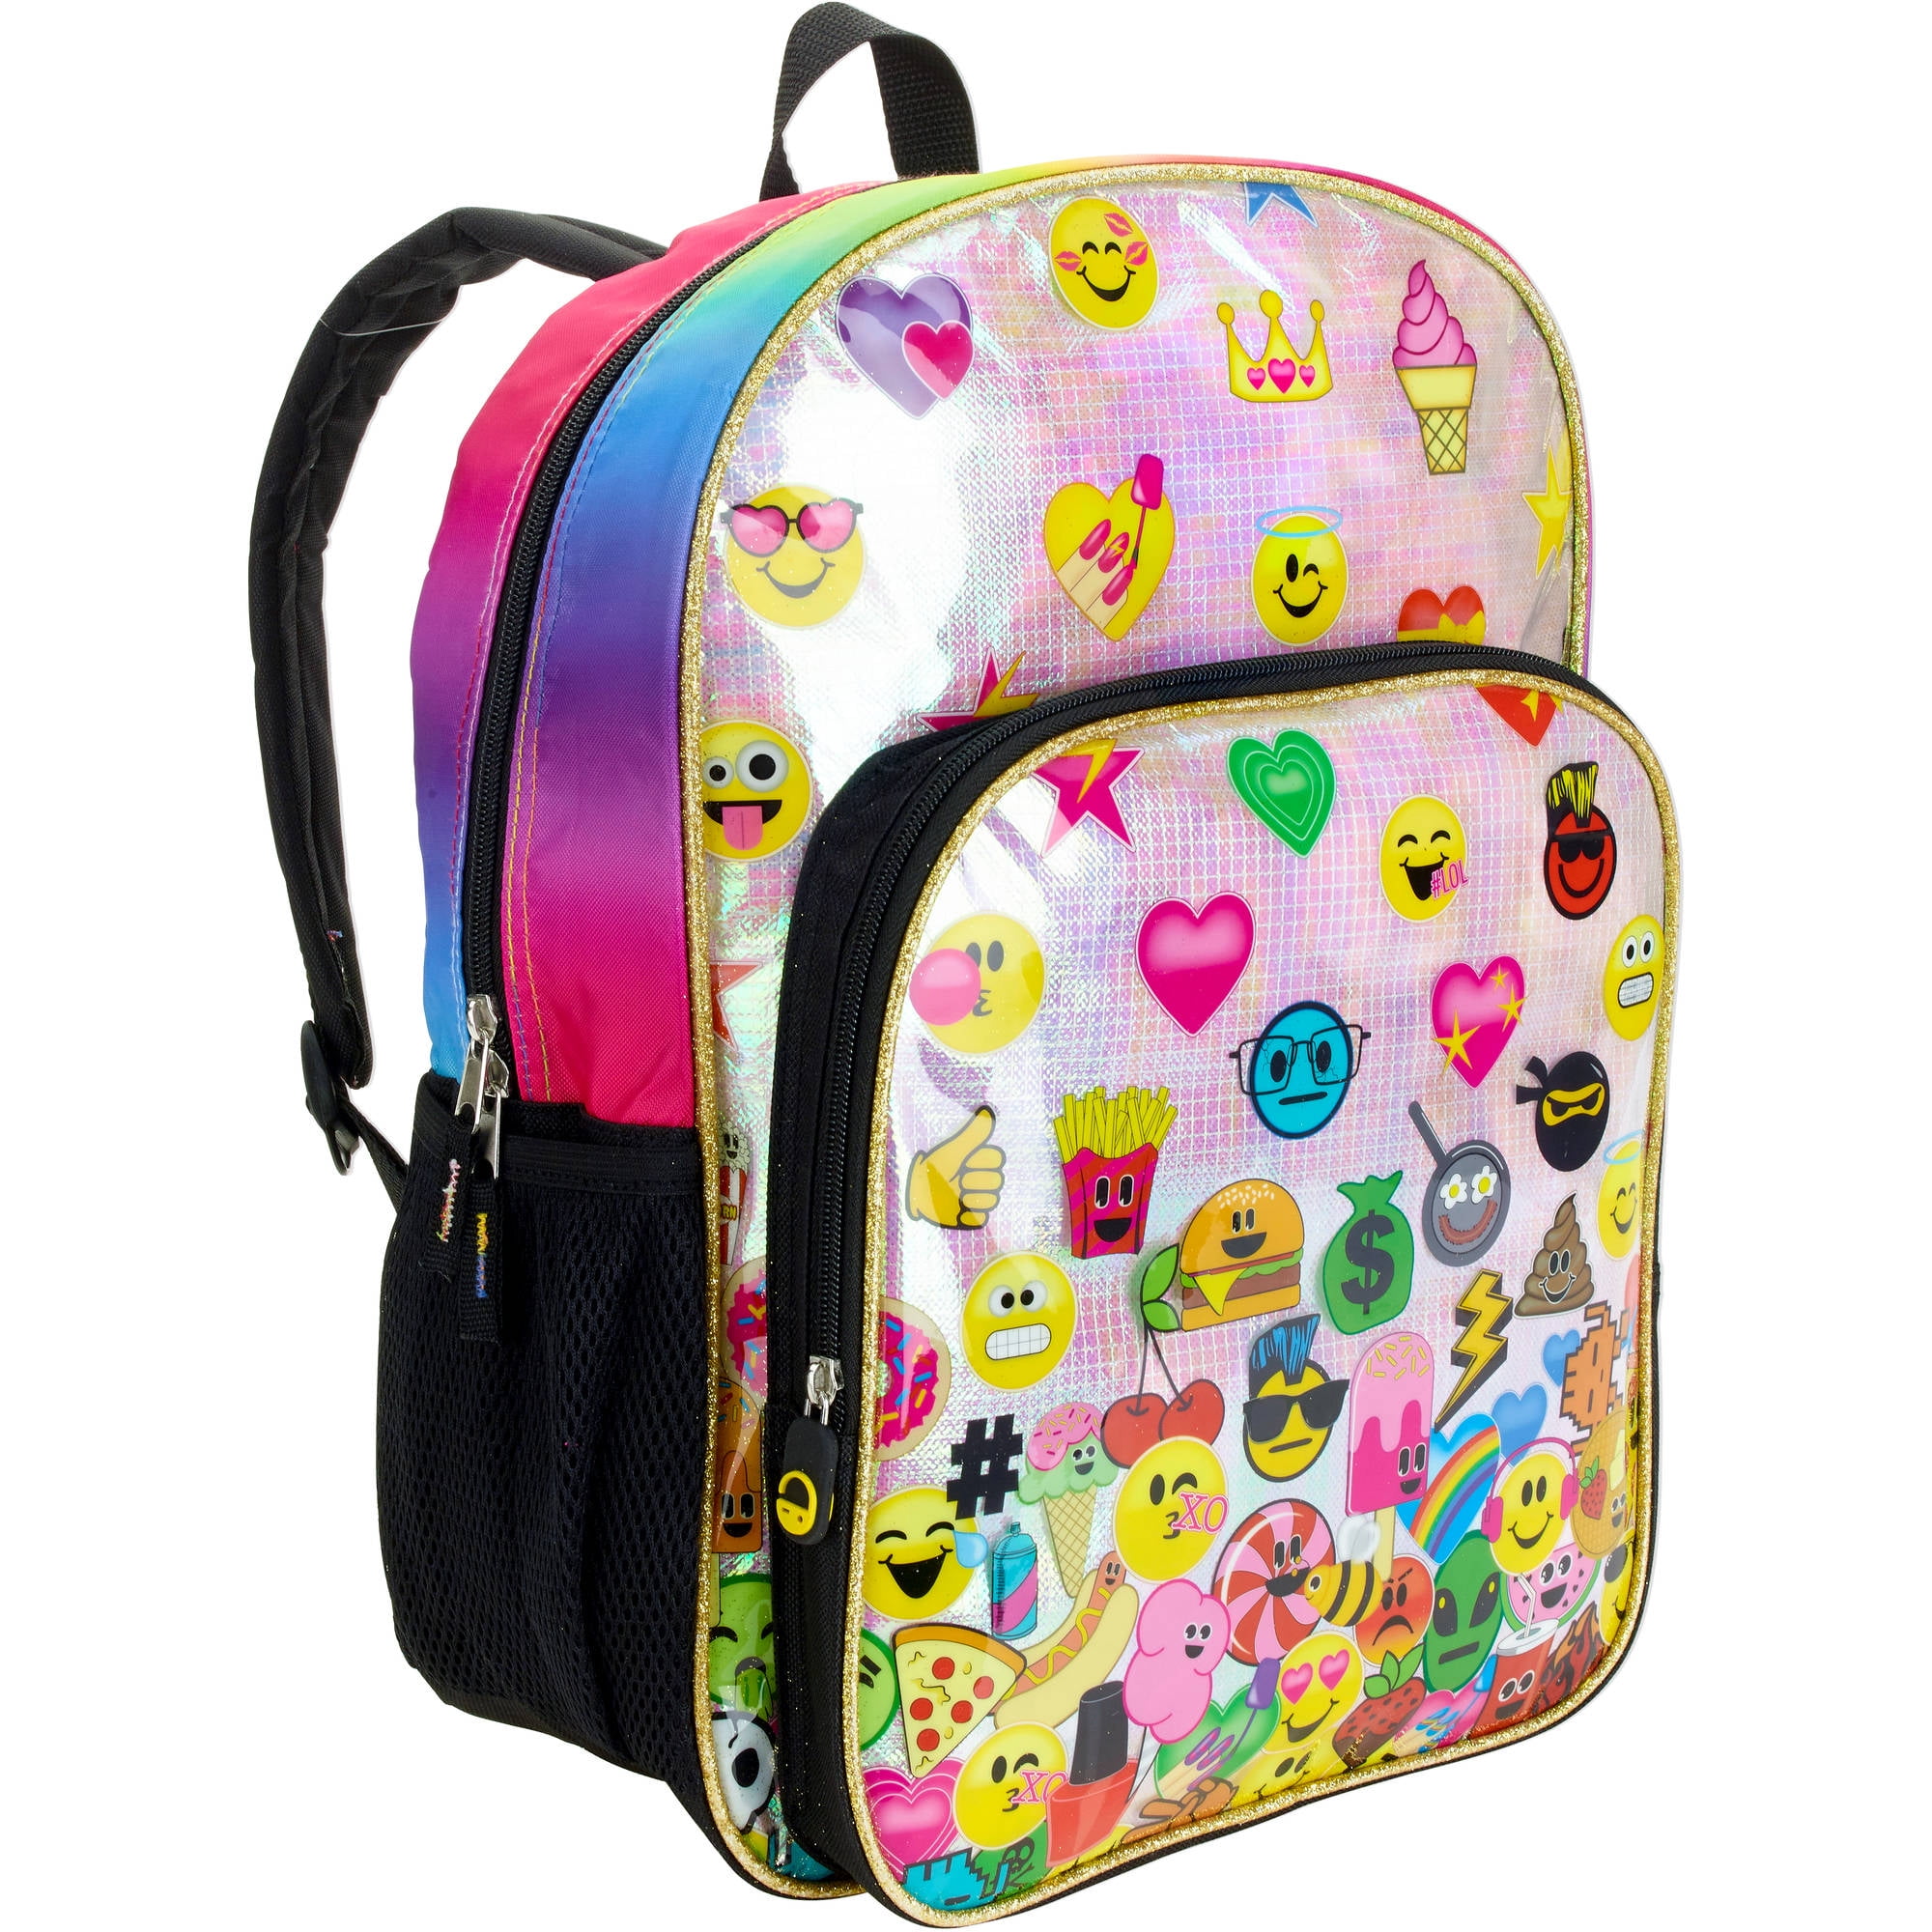 Keychain shoe set1 chivas backpack school mochila official Merchandise bookbag 